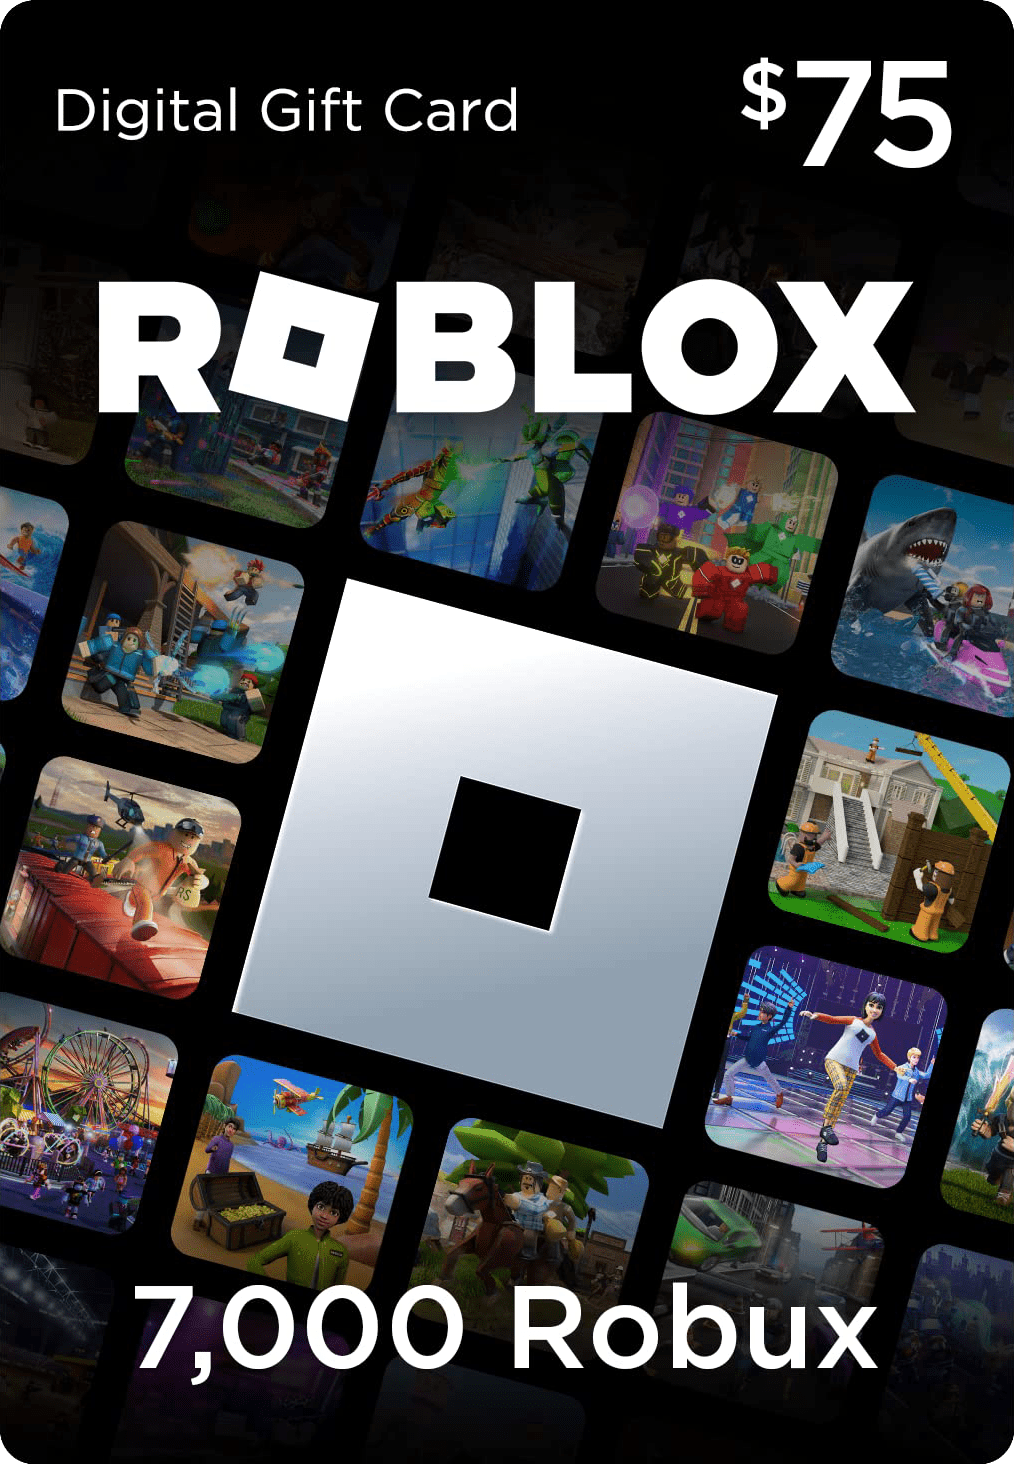 Roblox Digital Gift Card | 7,000 Robux